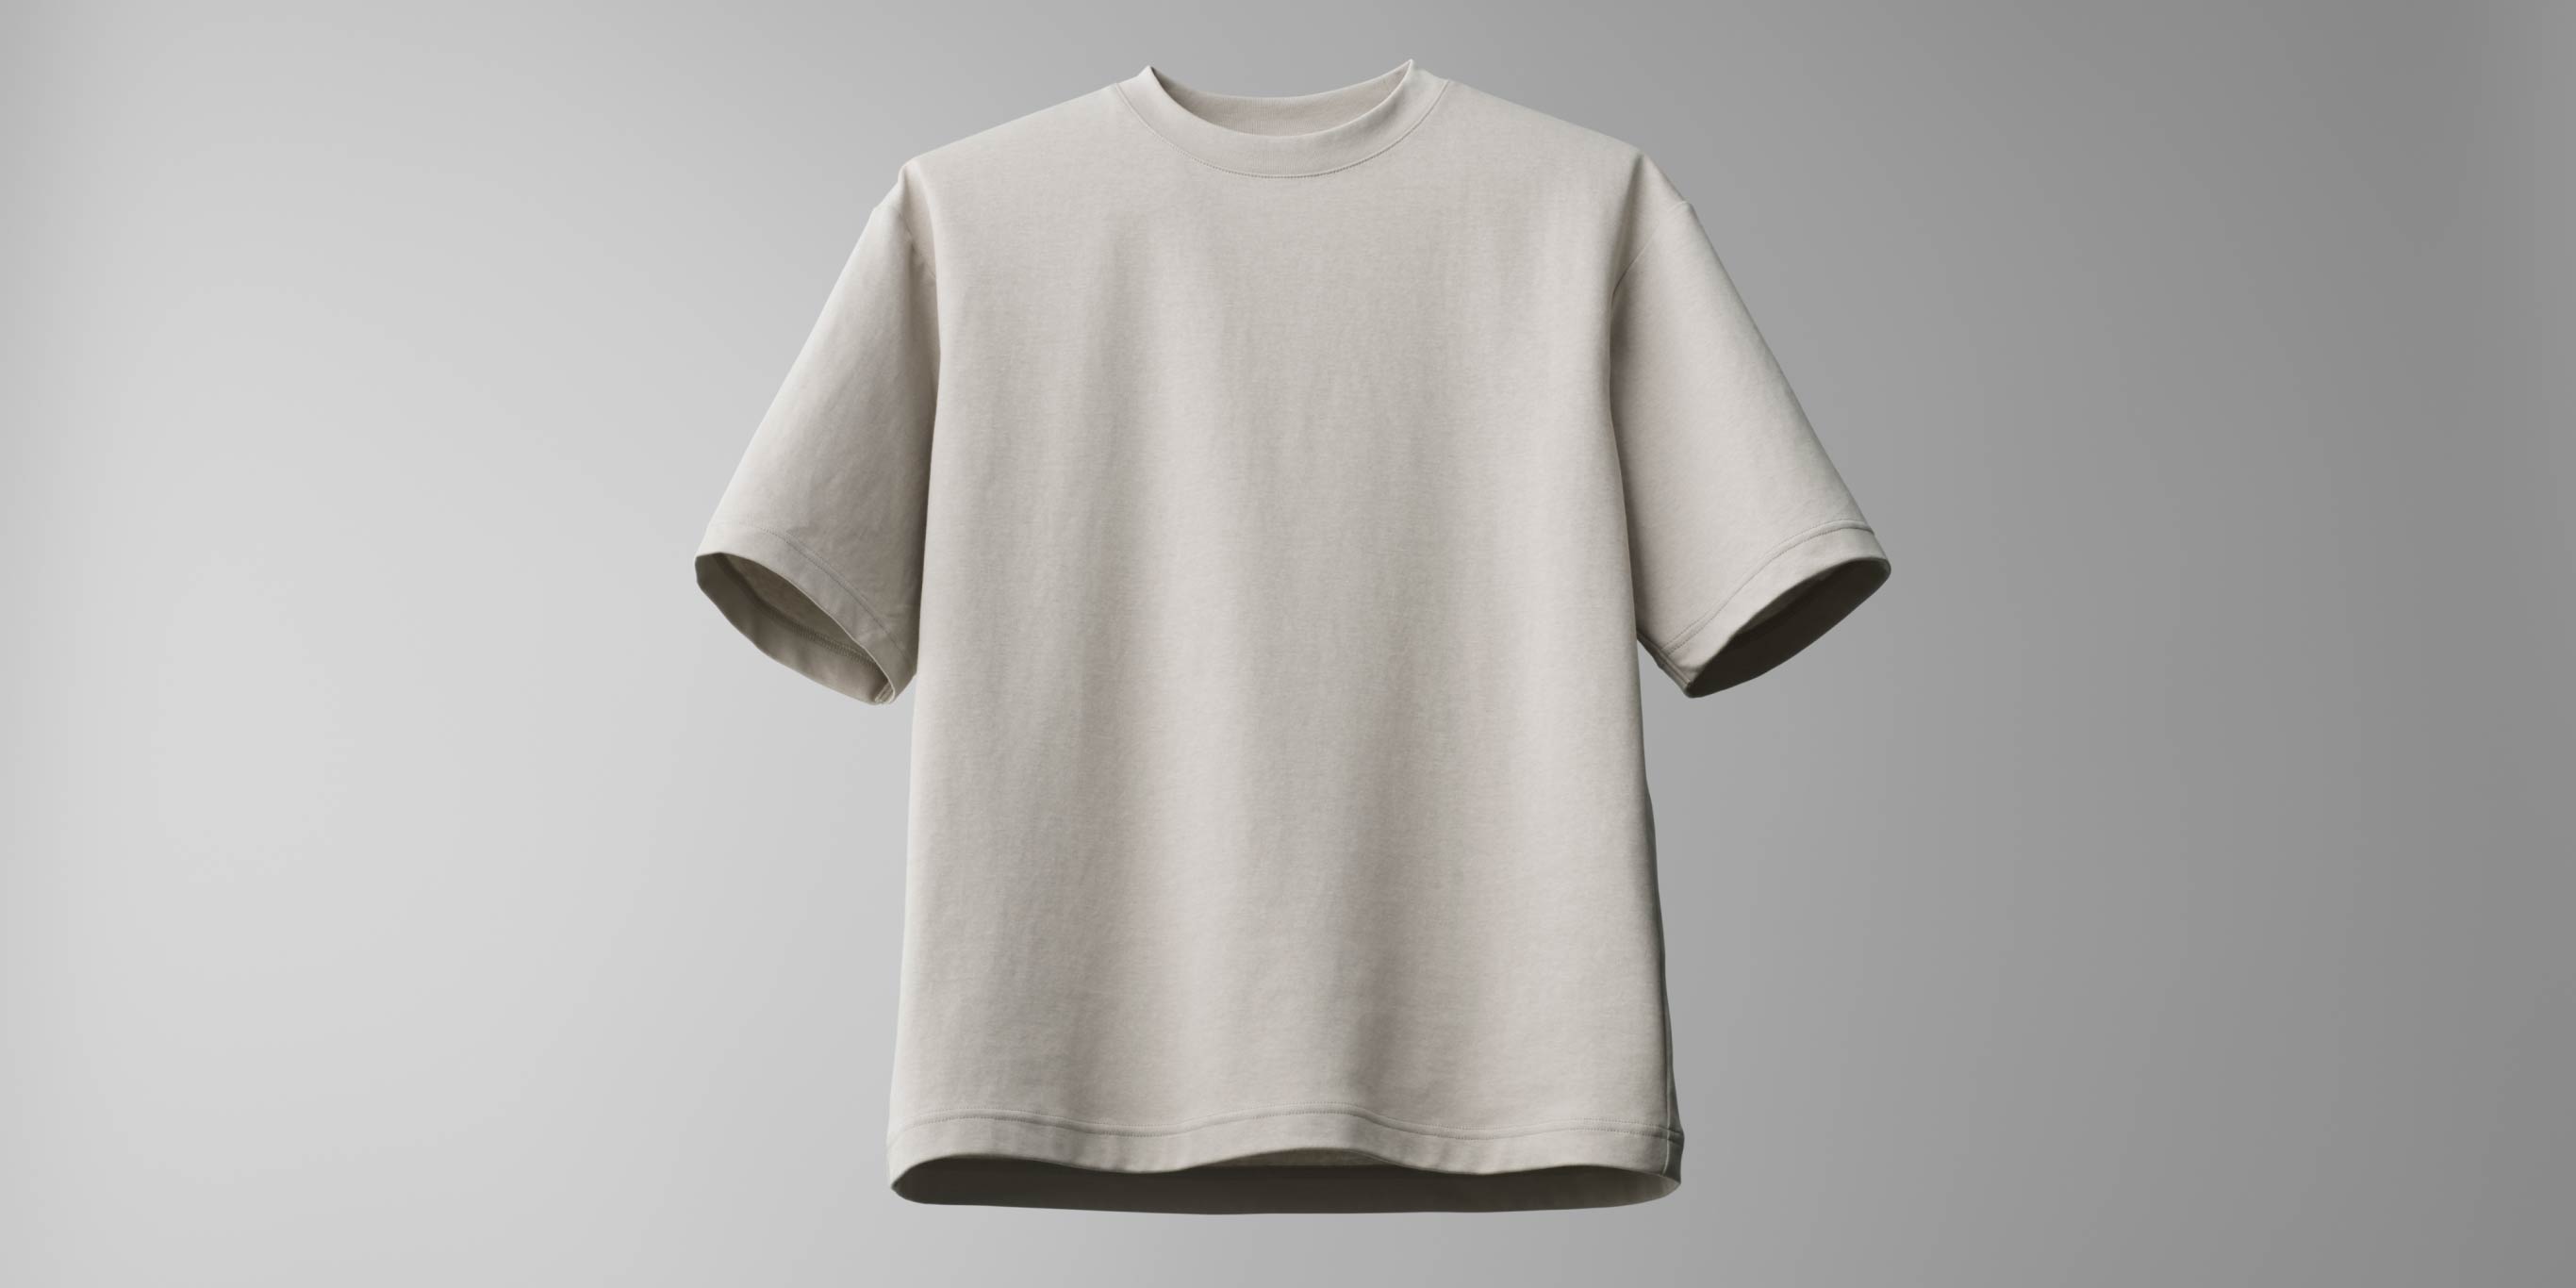 UNIQLO's best-selling t-shirt worldwide.